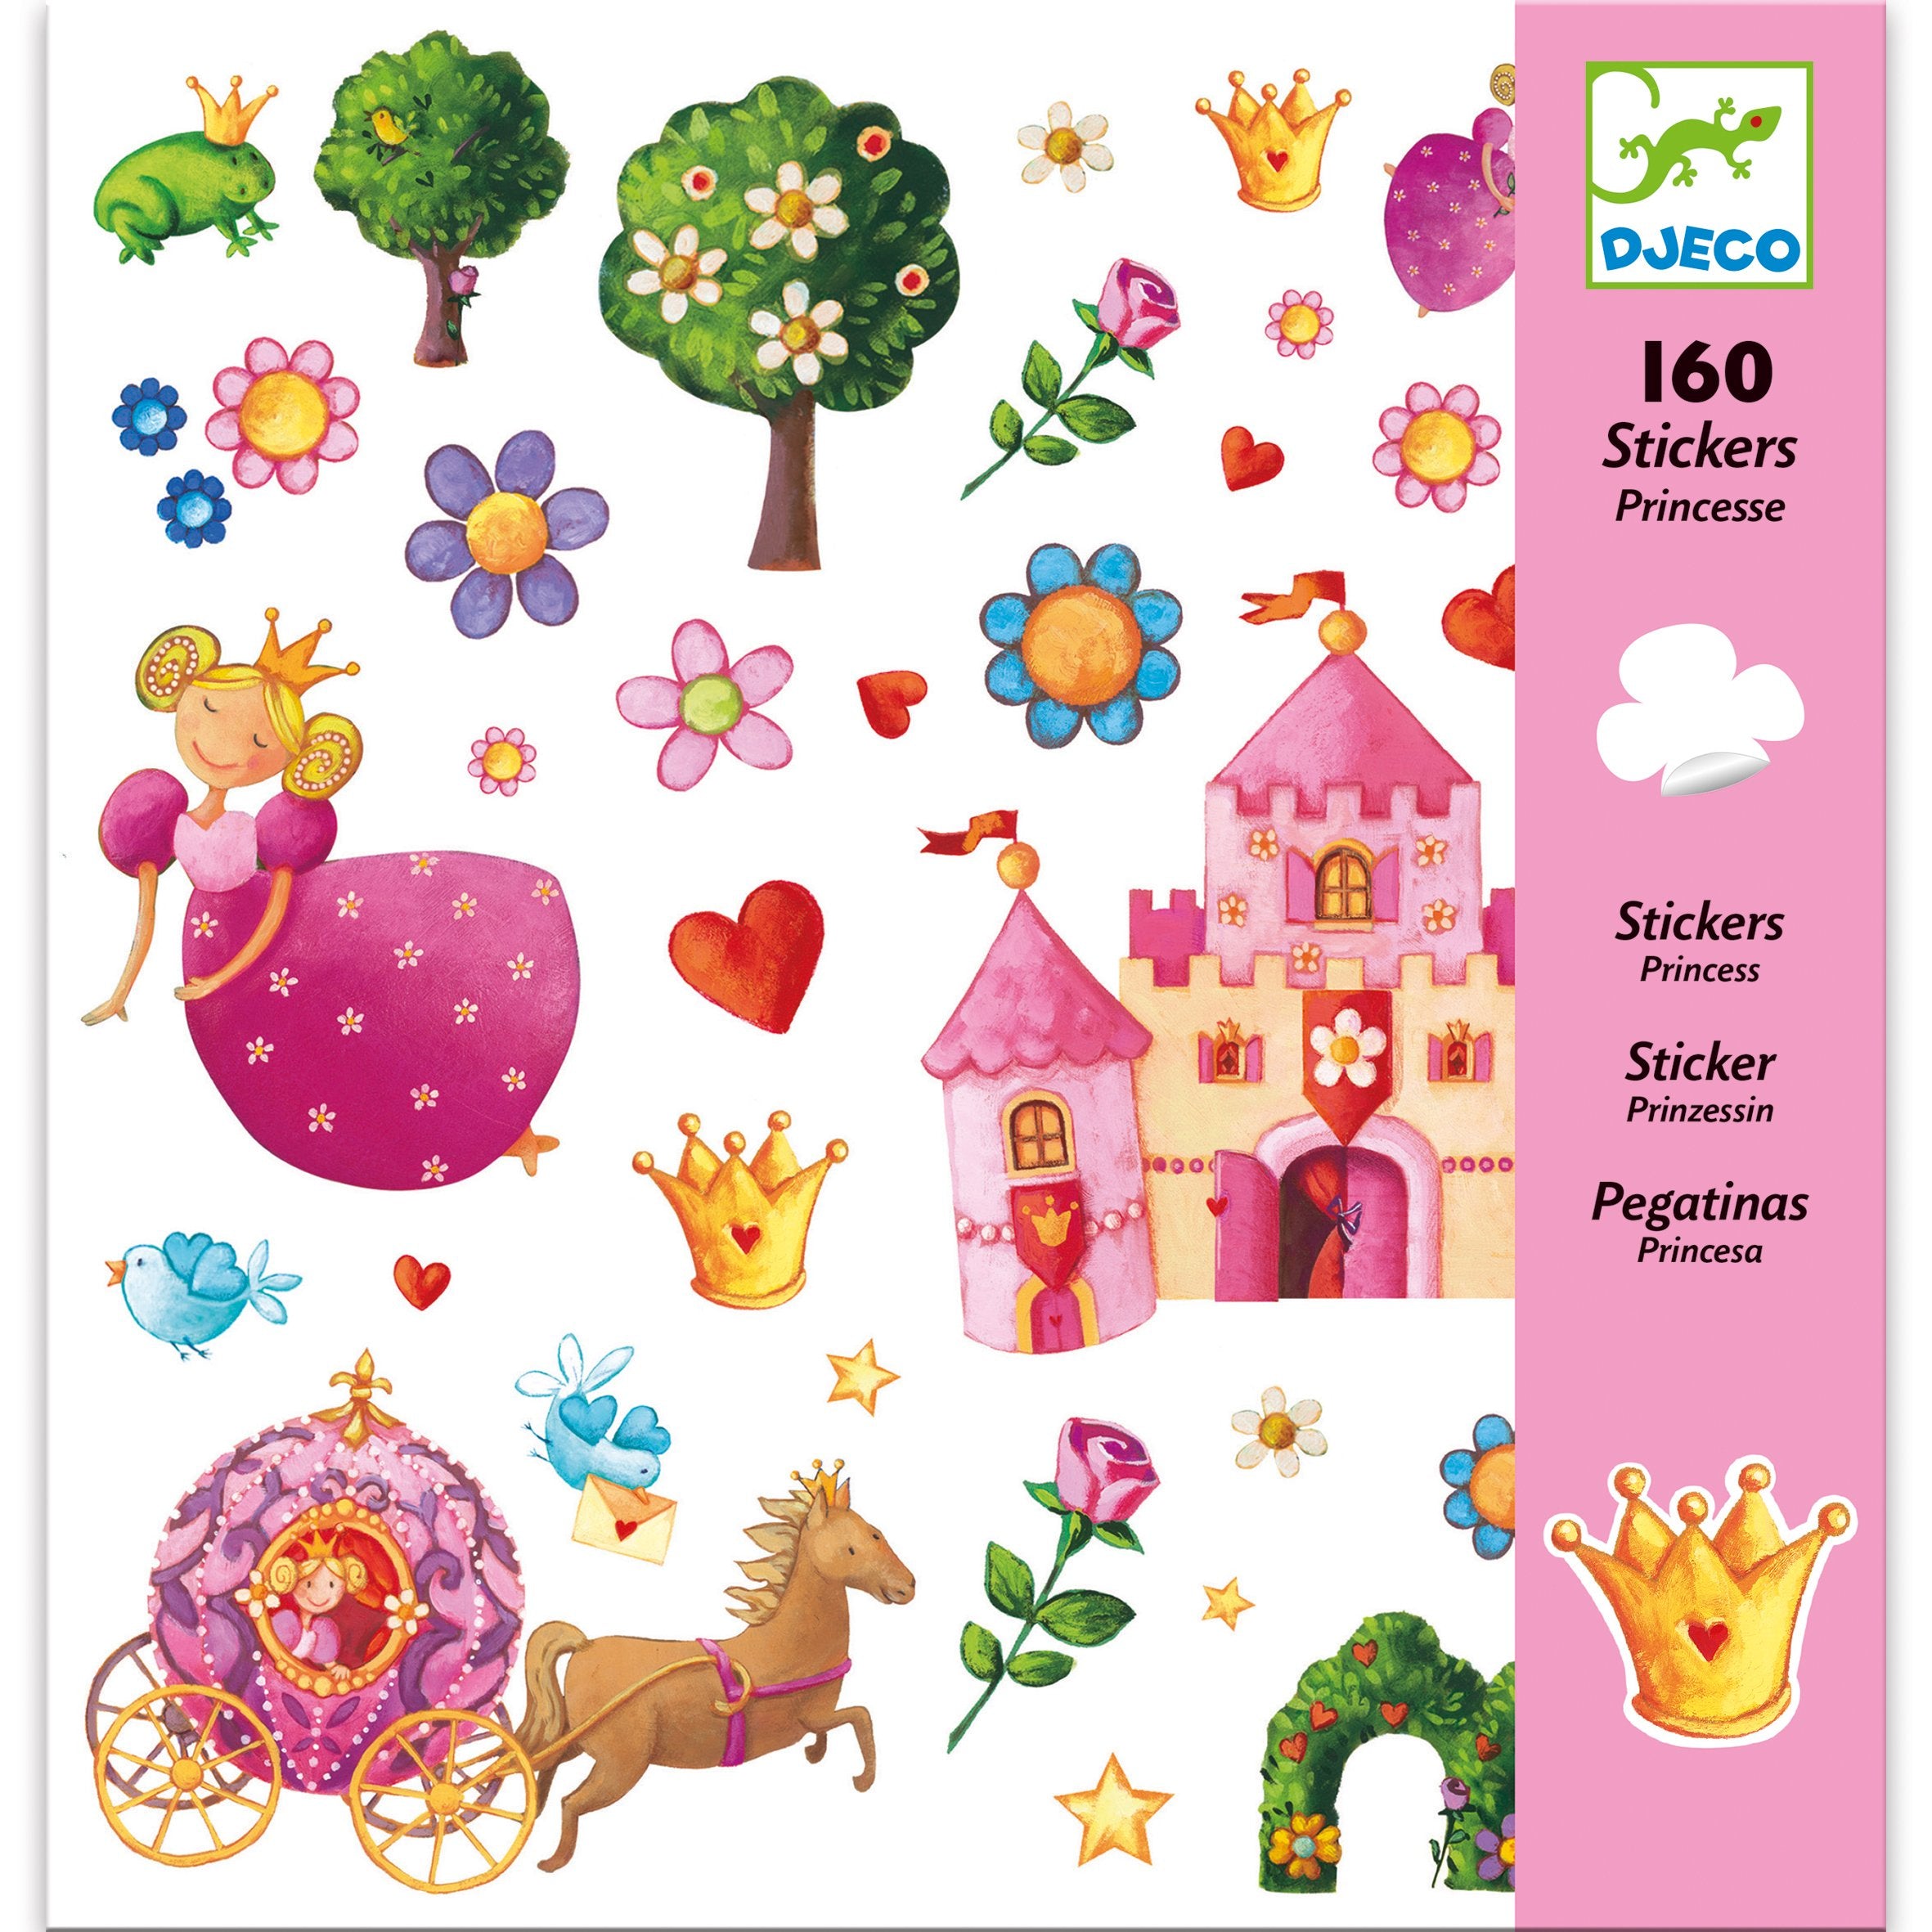 Stickers - Princess Marguerite